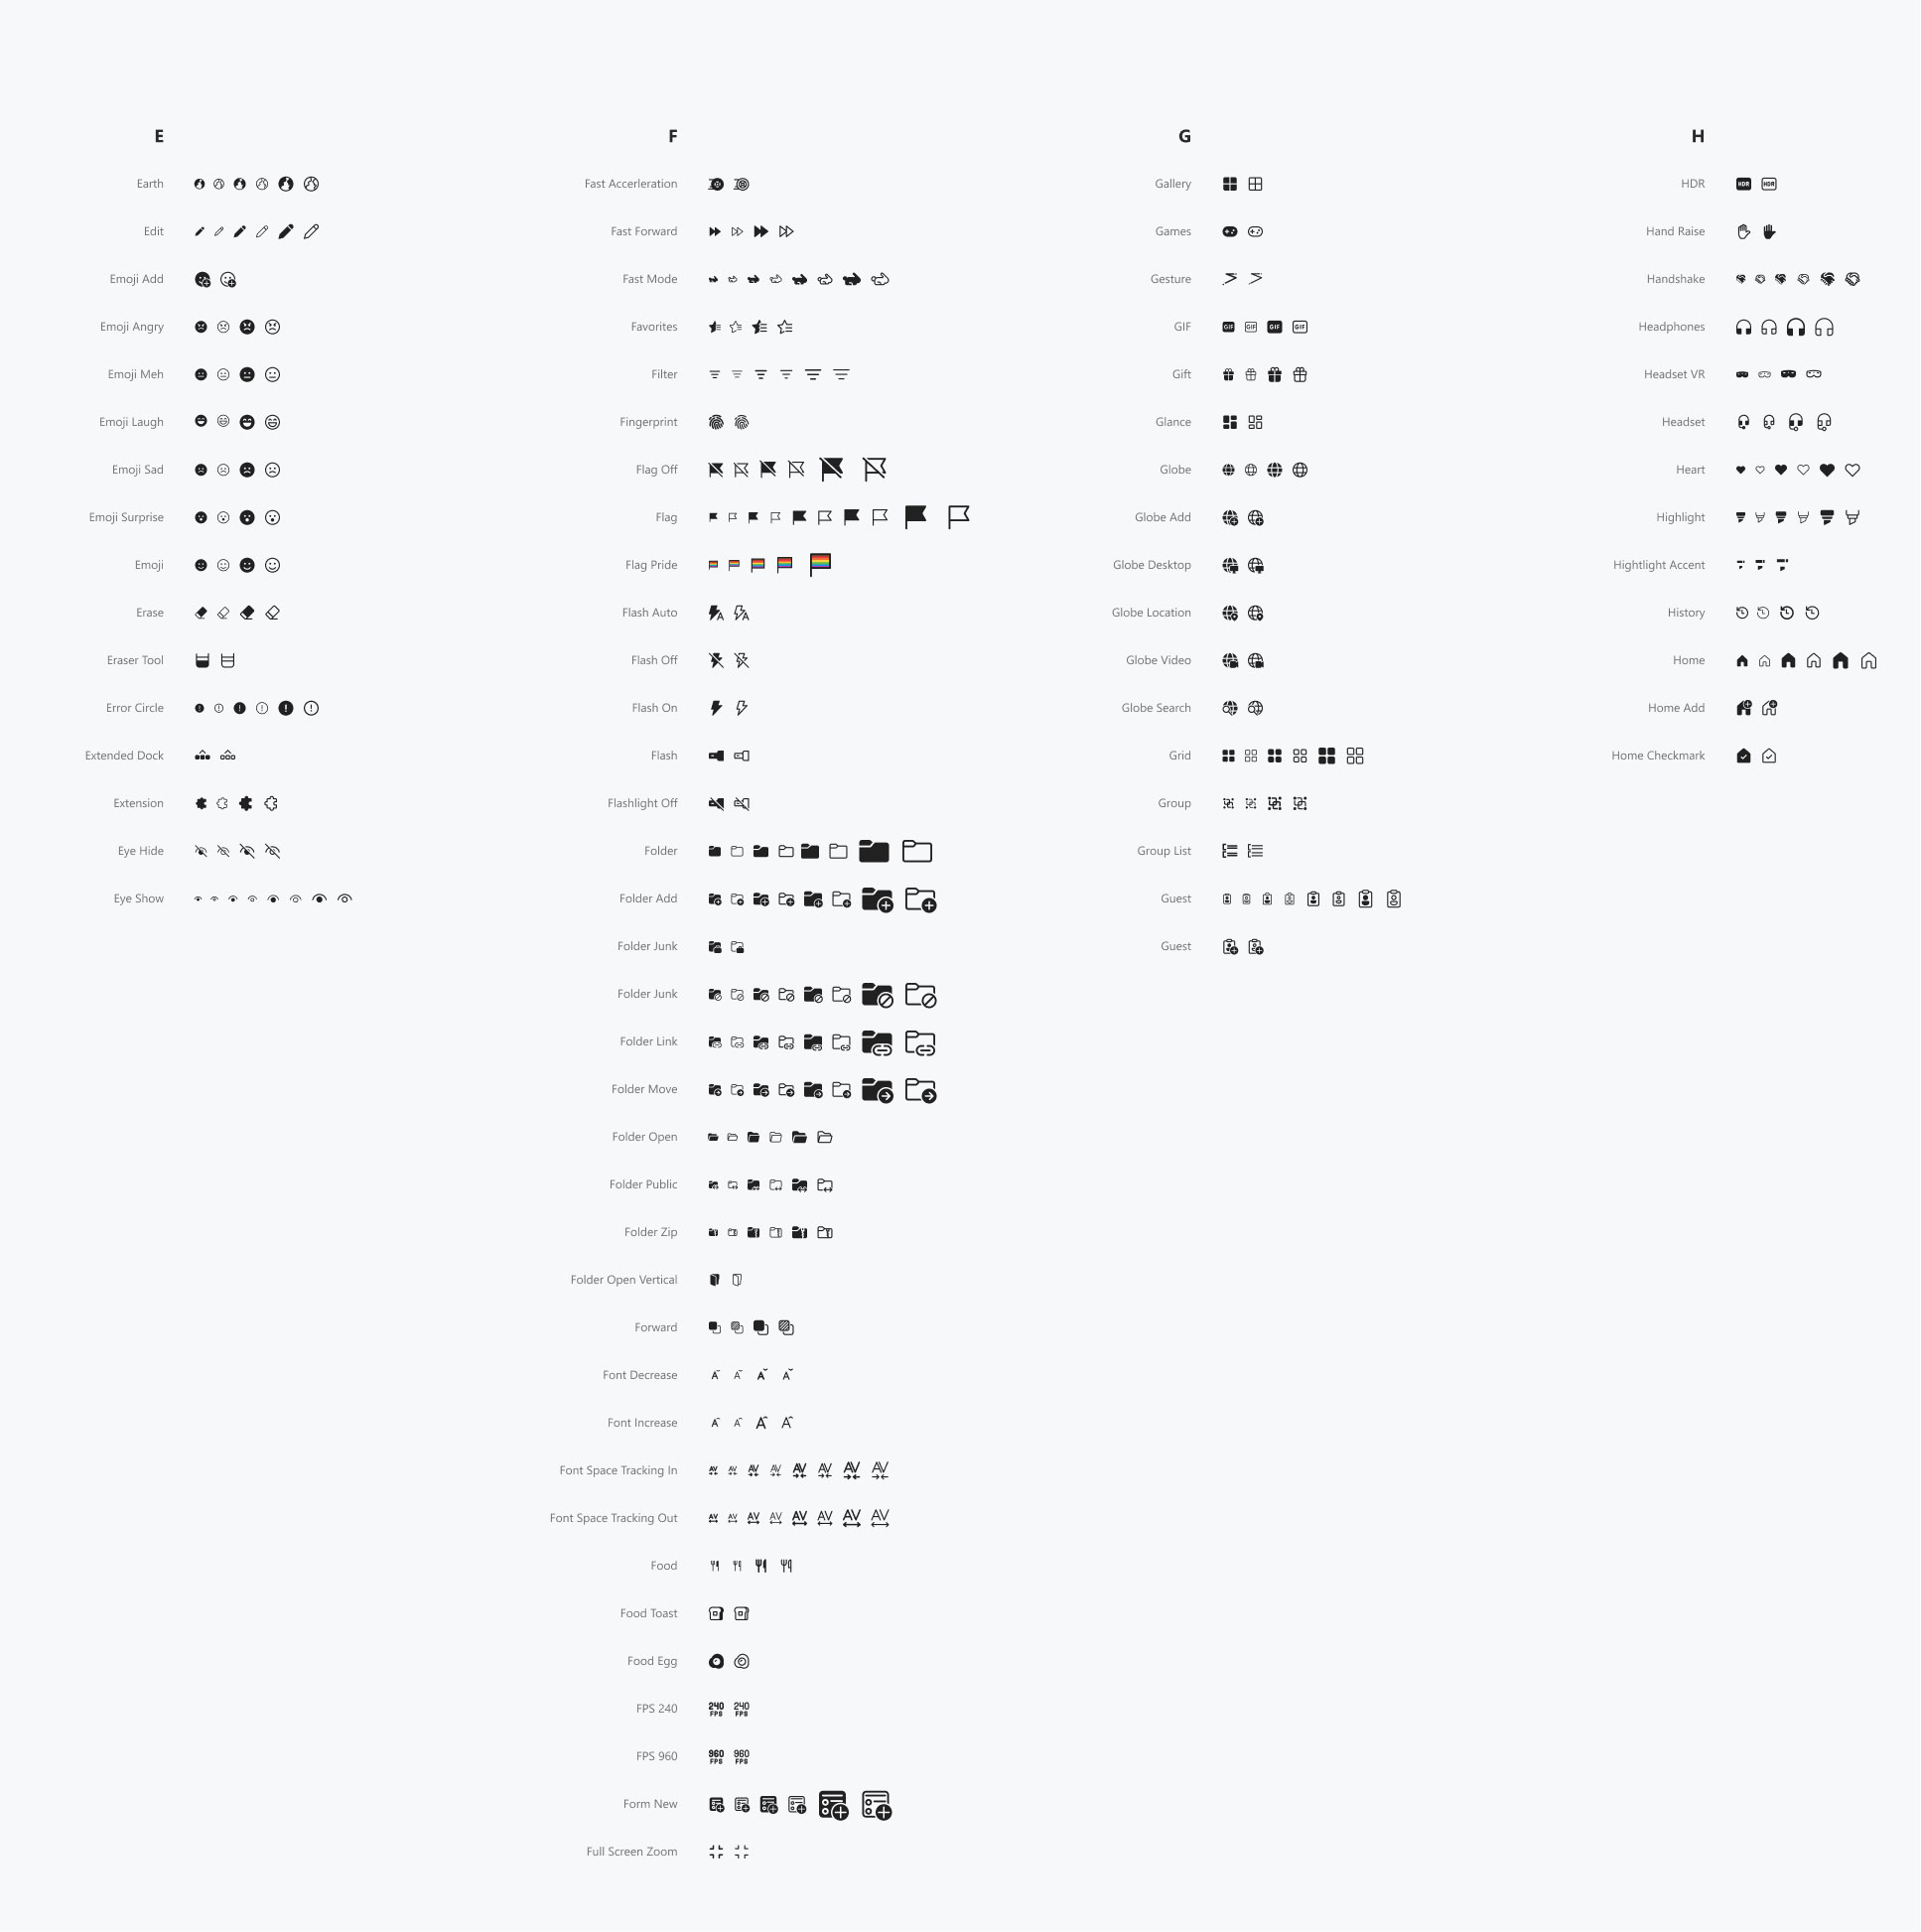 一套Microsoft Fluent icons 超全线性面性图标集 .fig素材